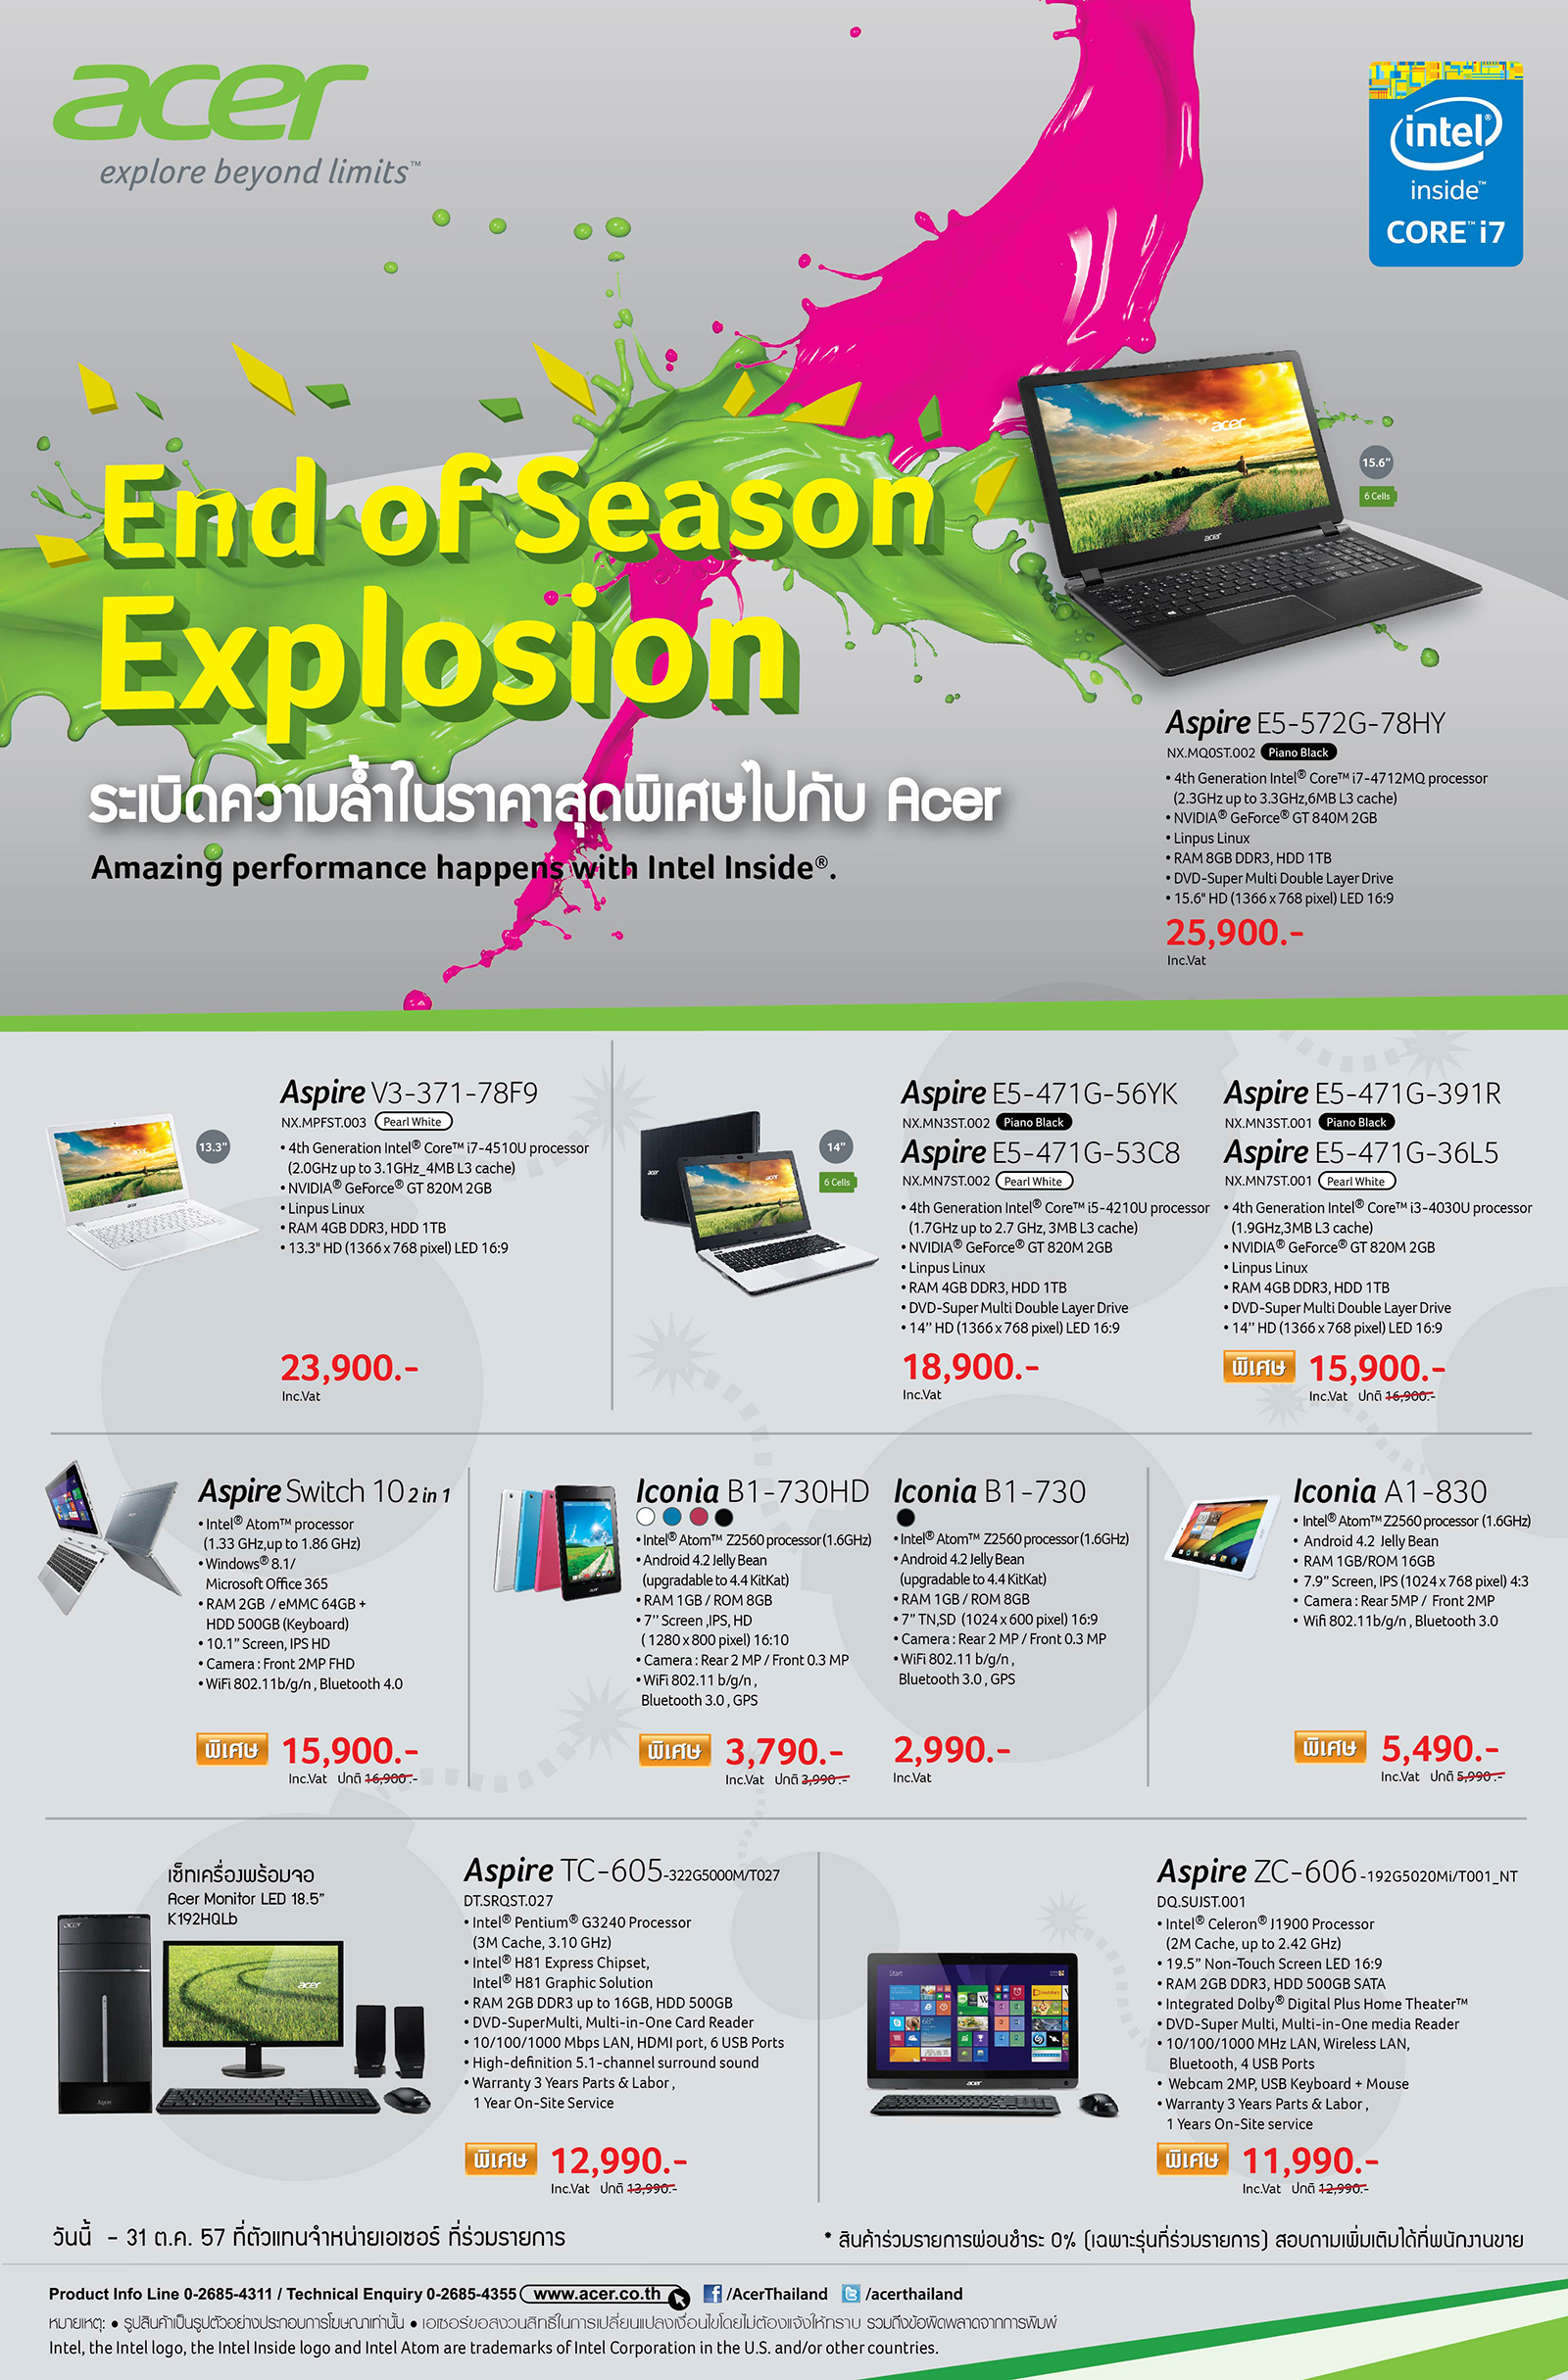 [PR] โปรโมชัน End of Season Explosion ระเบิดความล้ำในราคาสุดพิเศษไปกับ Acer